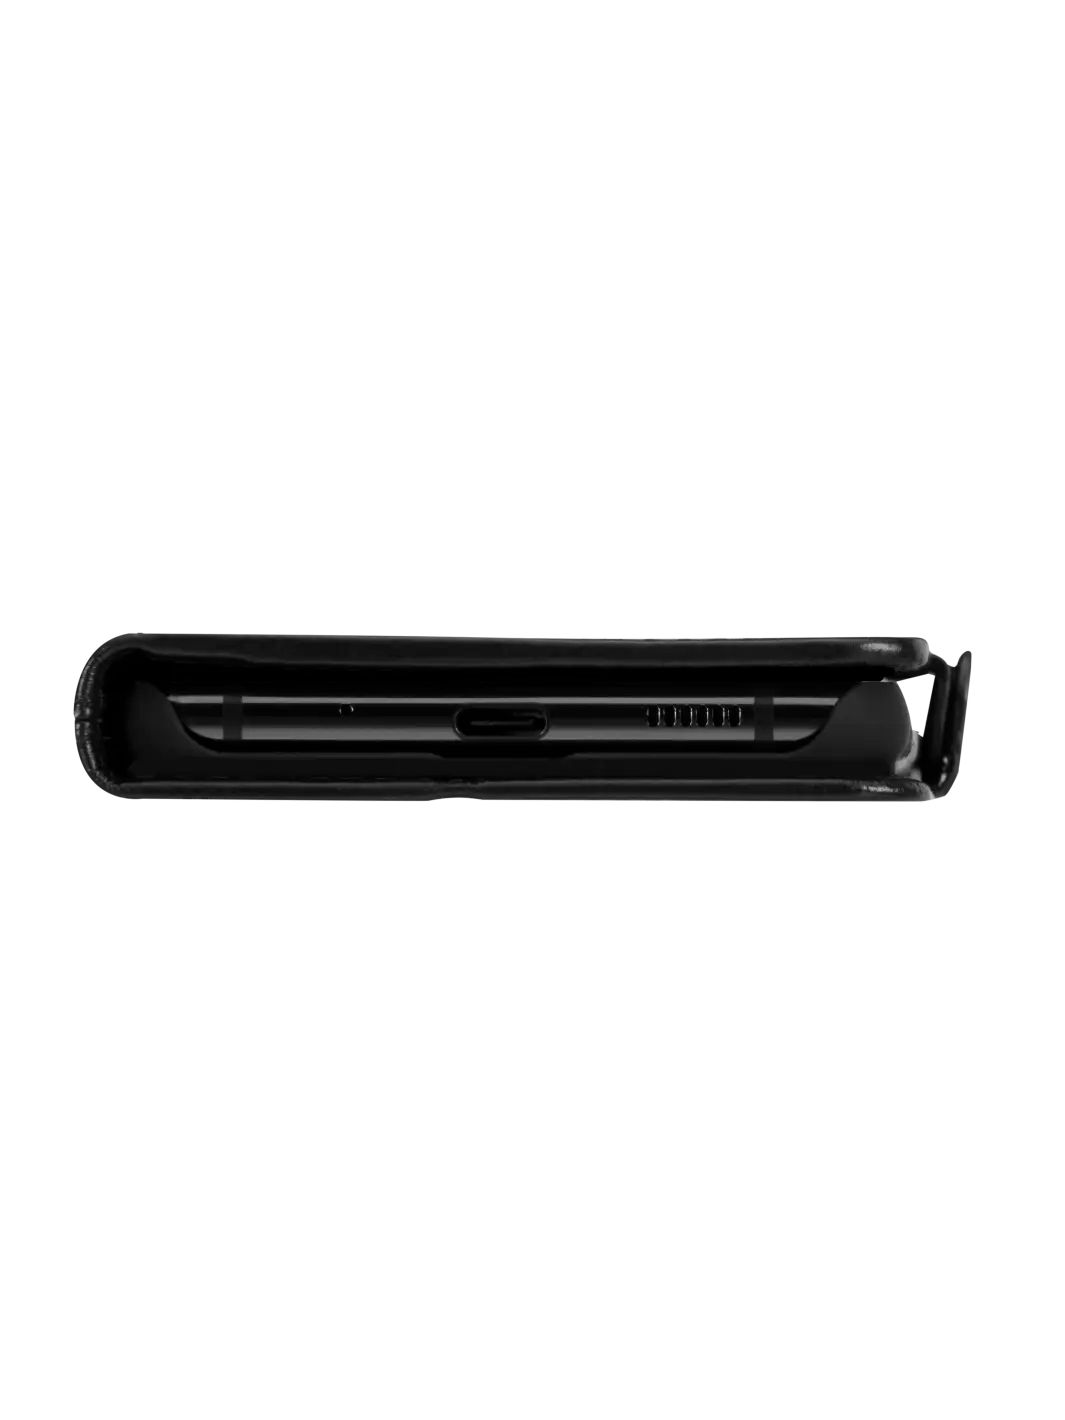 Copenhagen Slim Black Galaxy A53 Phone Cases